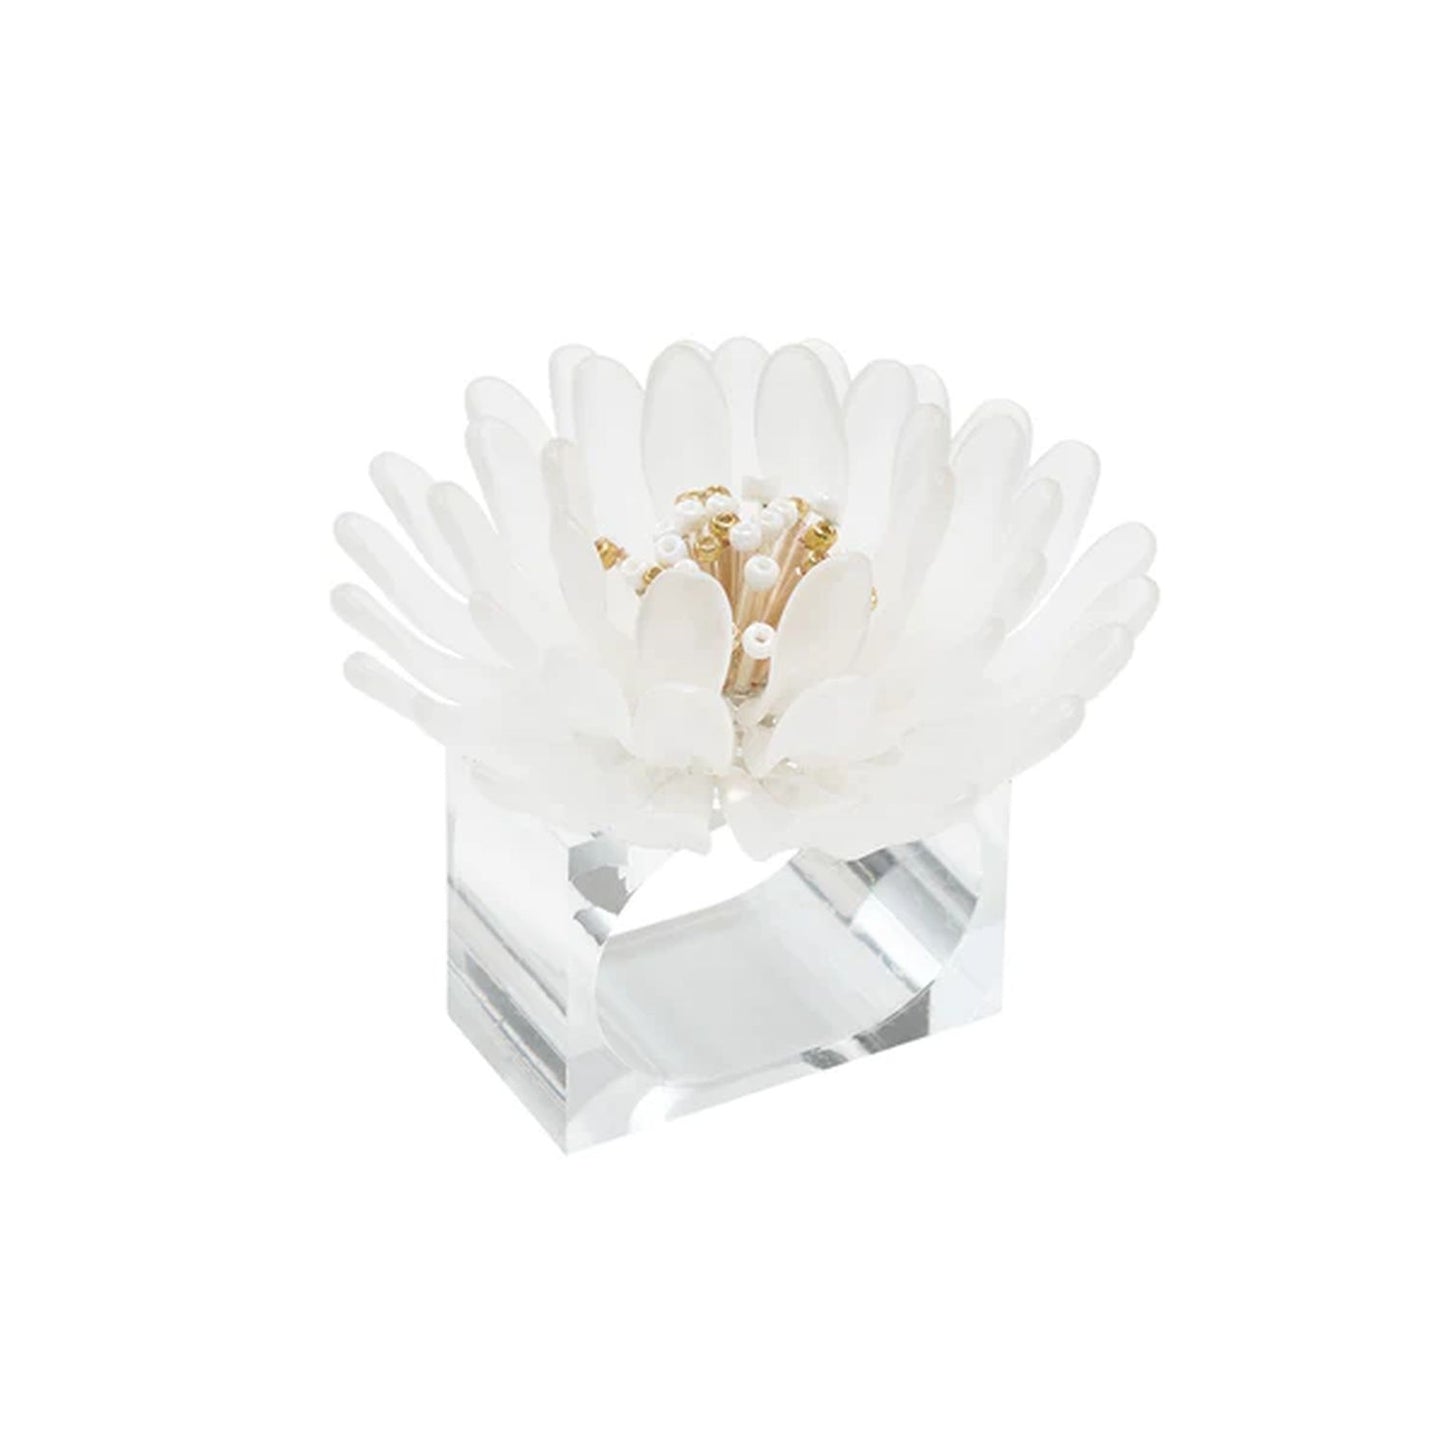 Kim Seybert Cosmos Napkin Ring in White & Gold, Set of 4 in a Gift Box